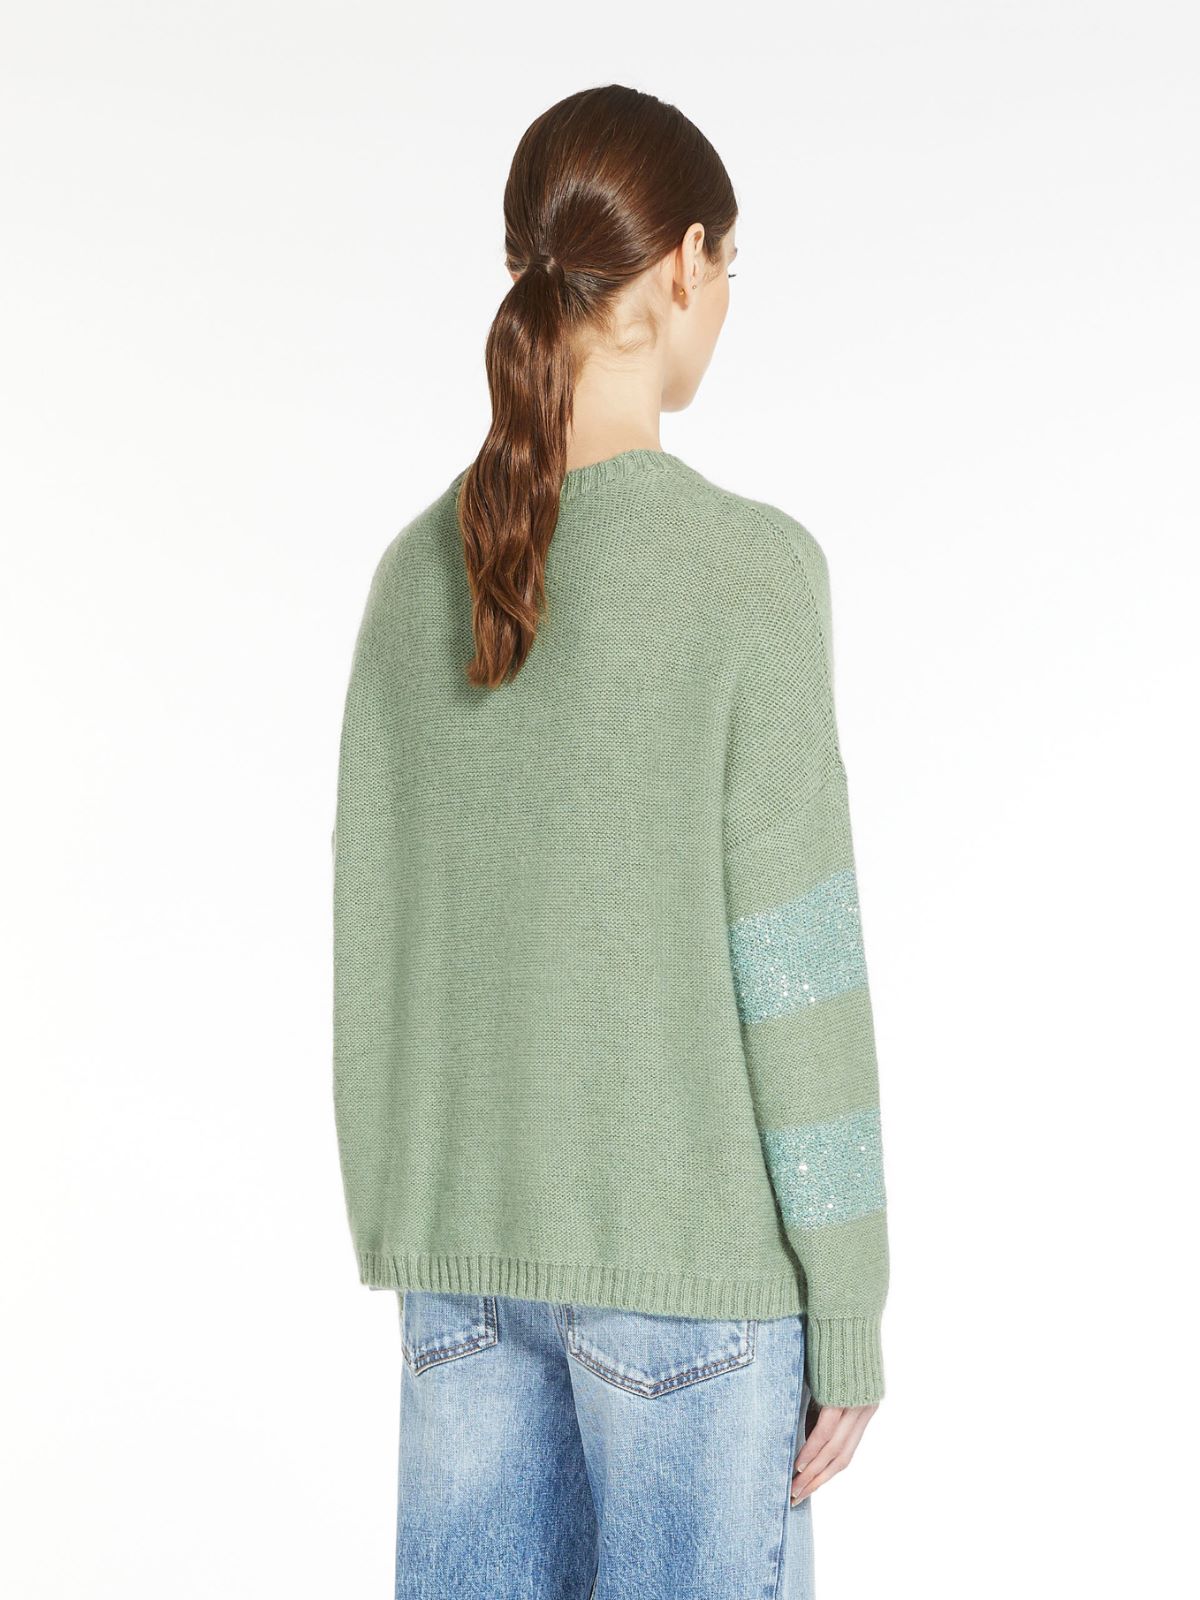 Sequin sweater - SAGE GREEN - Weekend Max Mara - 3